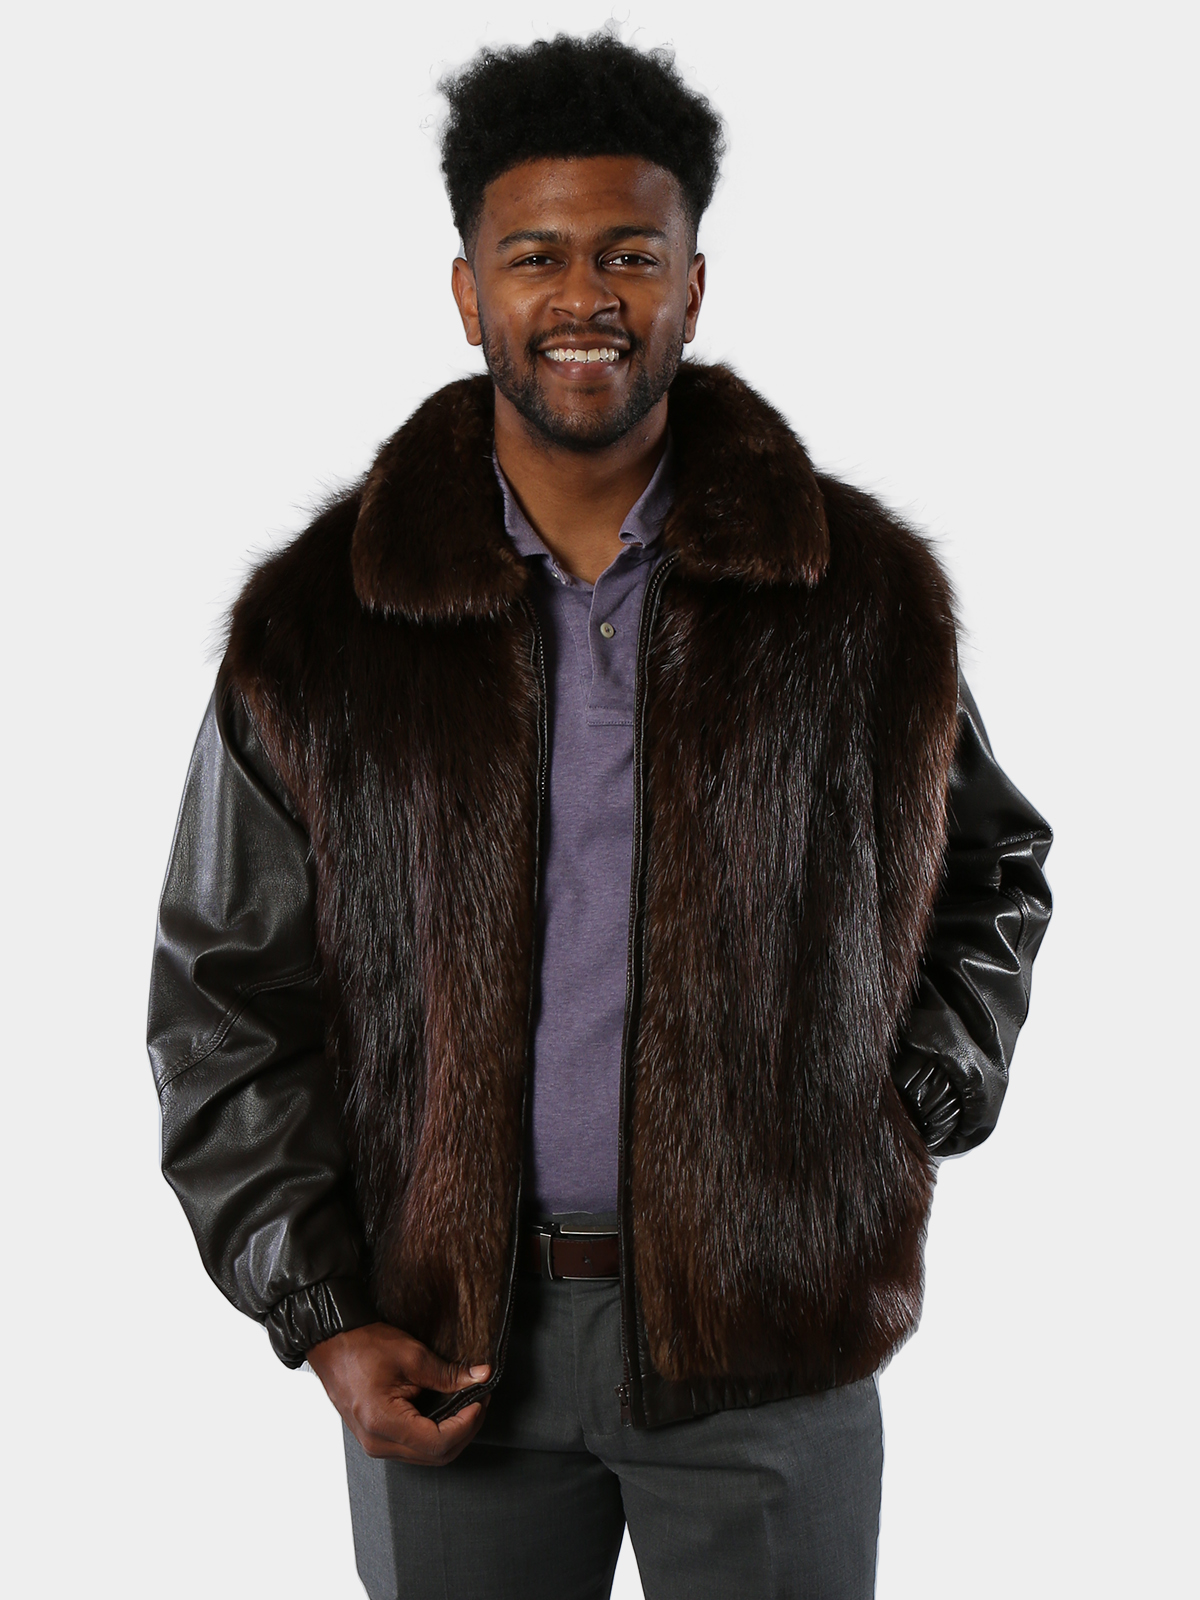 Buy Derbenny Black Fur Jacket for Men at Amazon.in